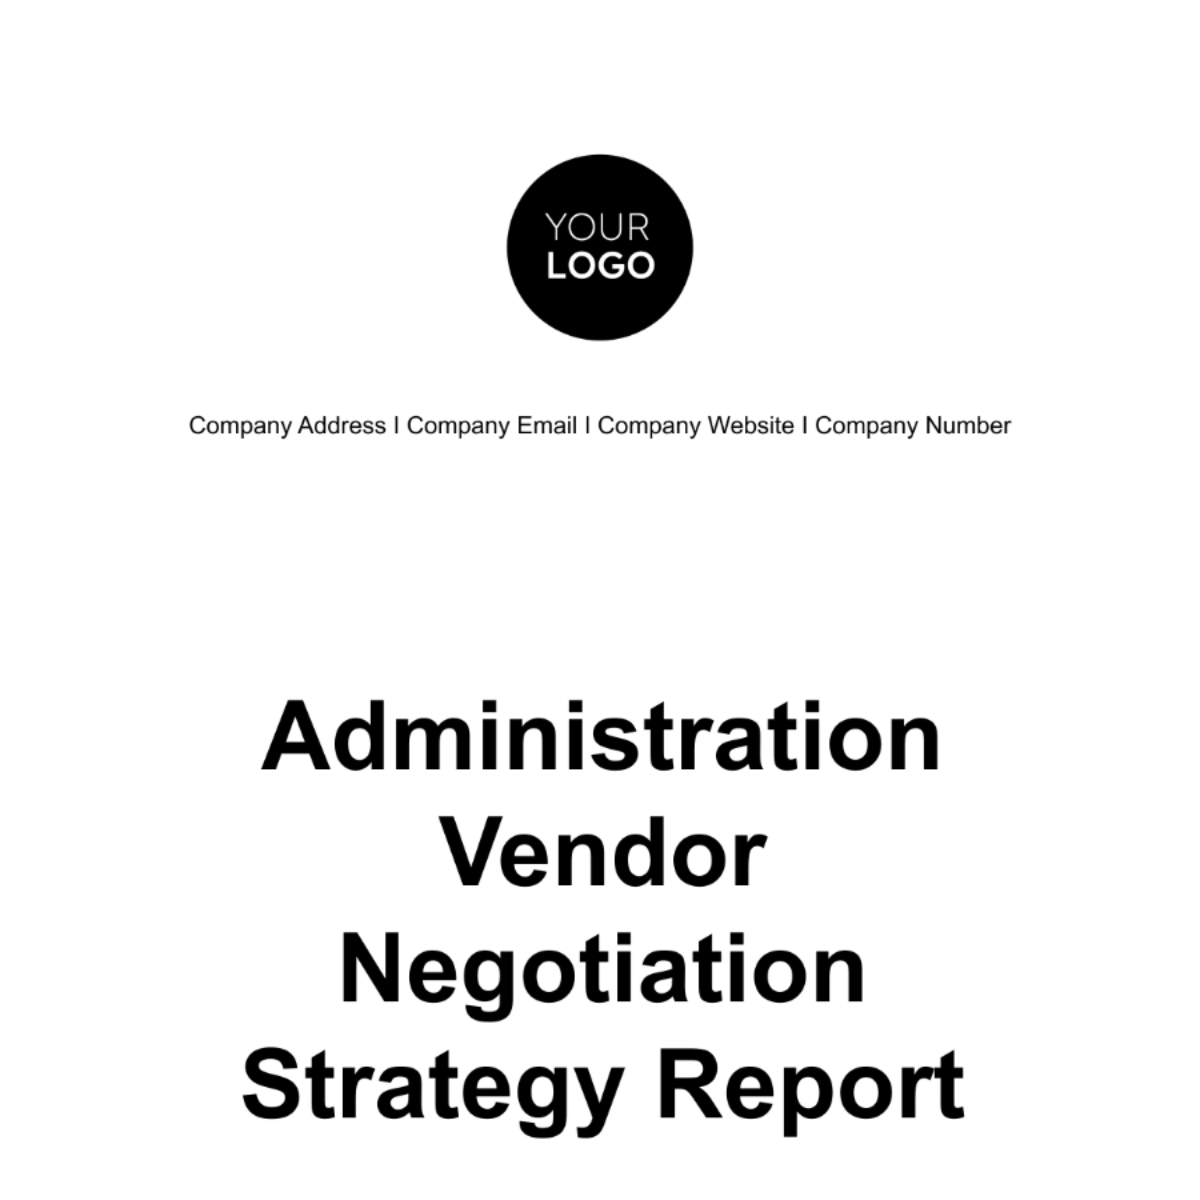 Administration Vendor Negotiation Strategy Report Template